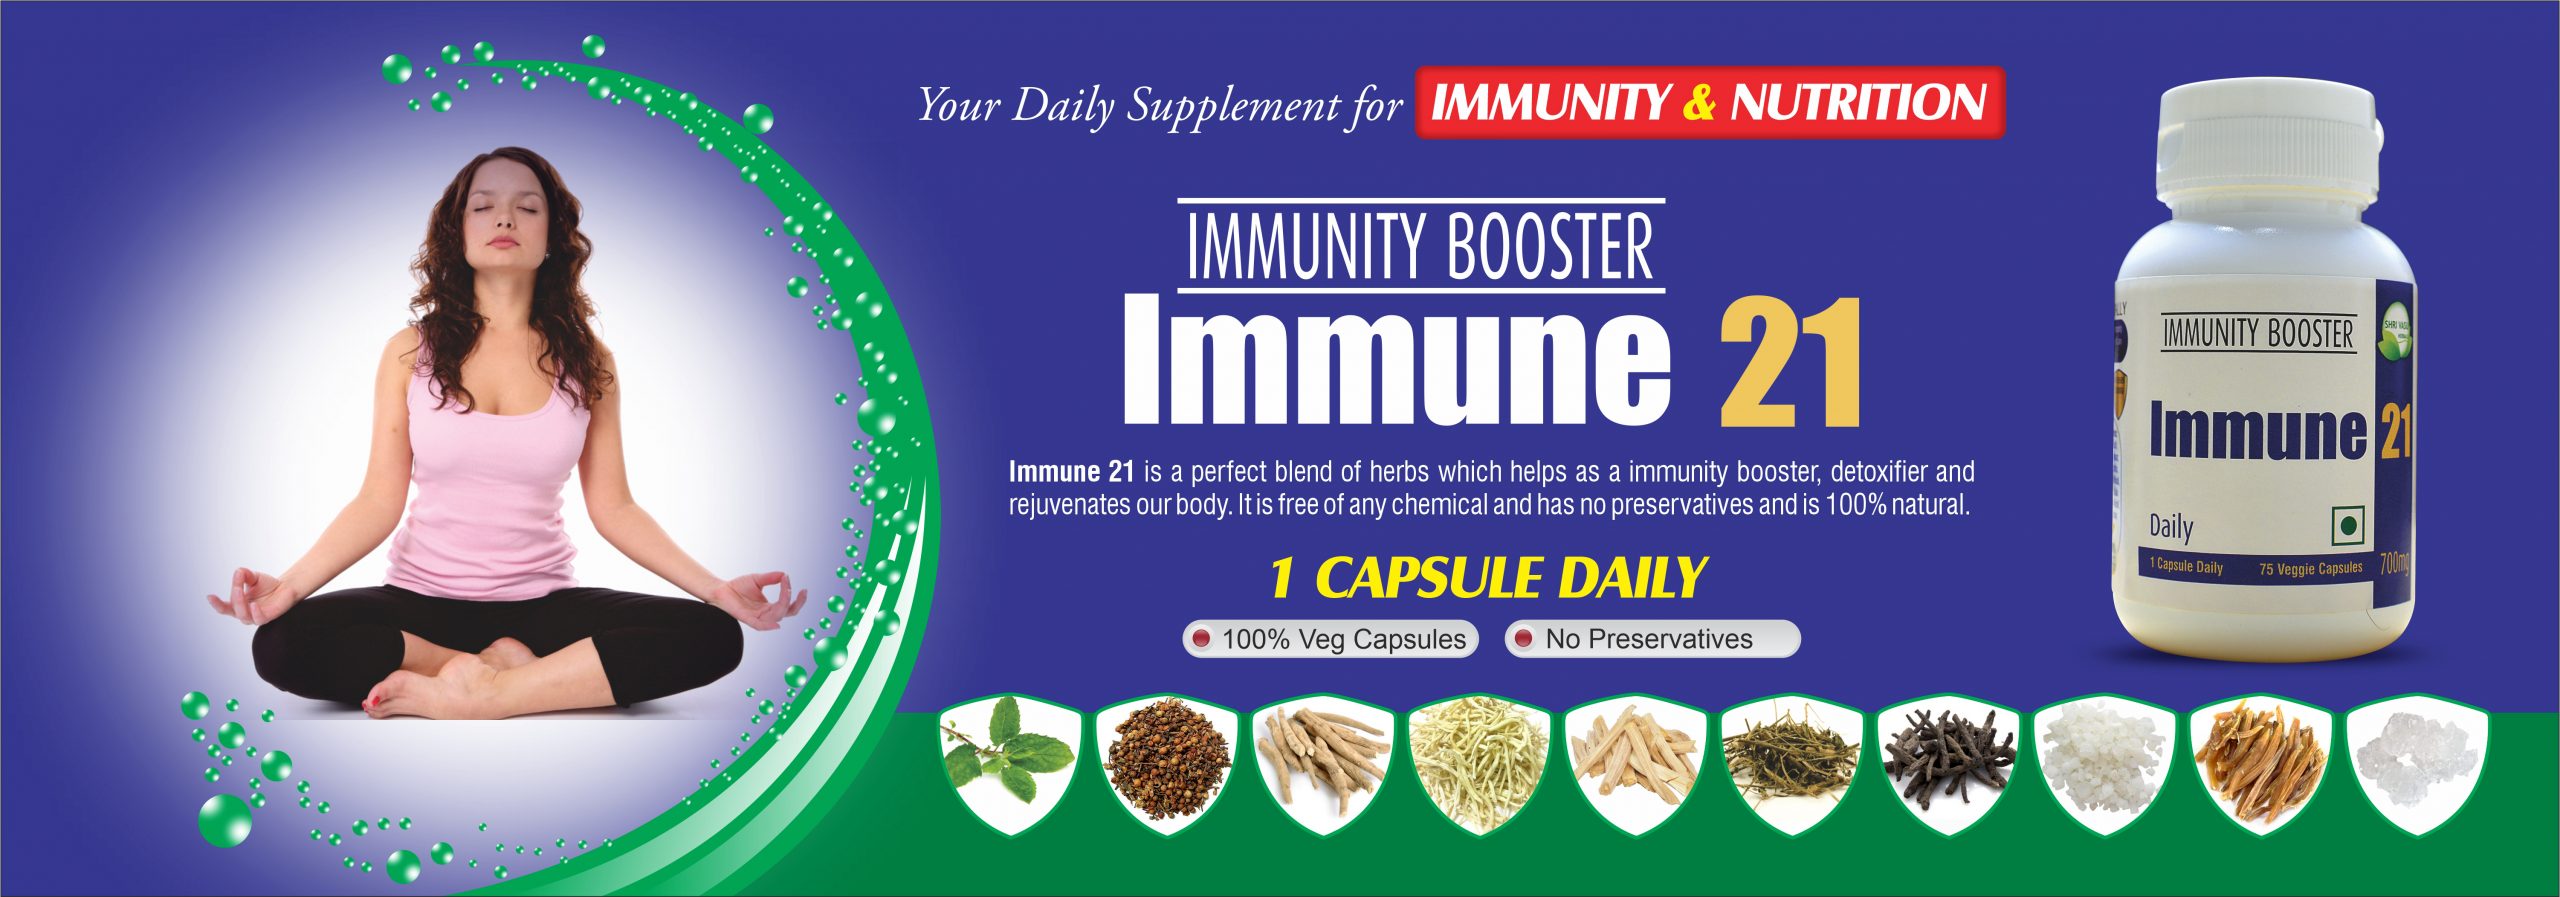 Immune 21 Web Page